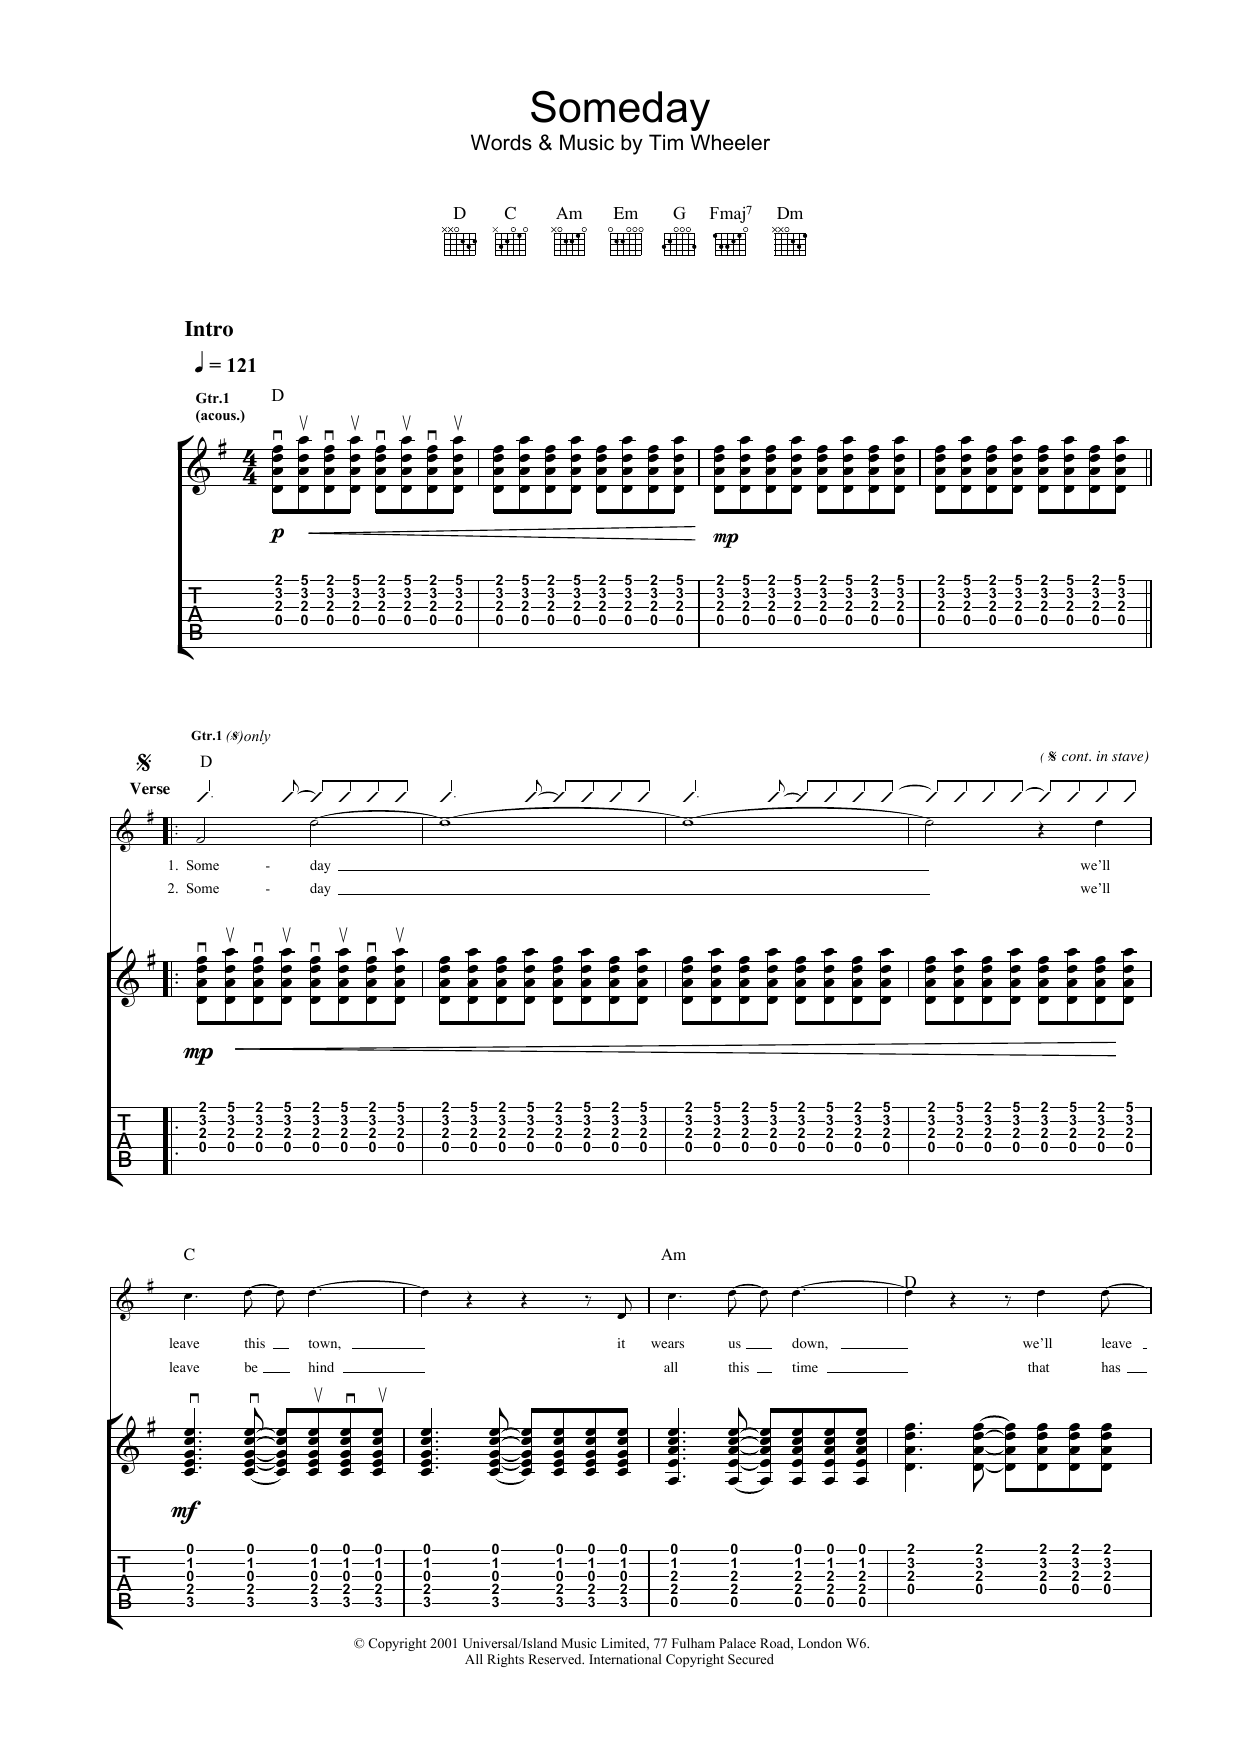 Ash Someday Sheet Music Notes & Chords for Guitar Tab - Download or Print PDF